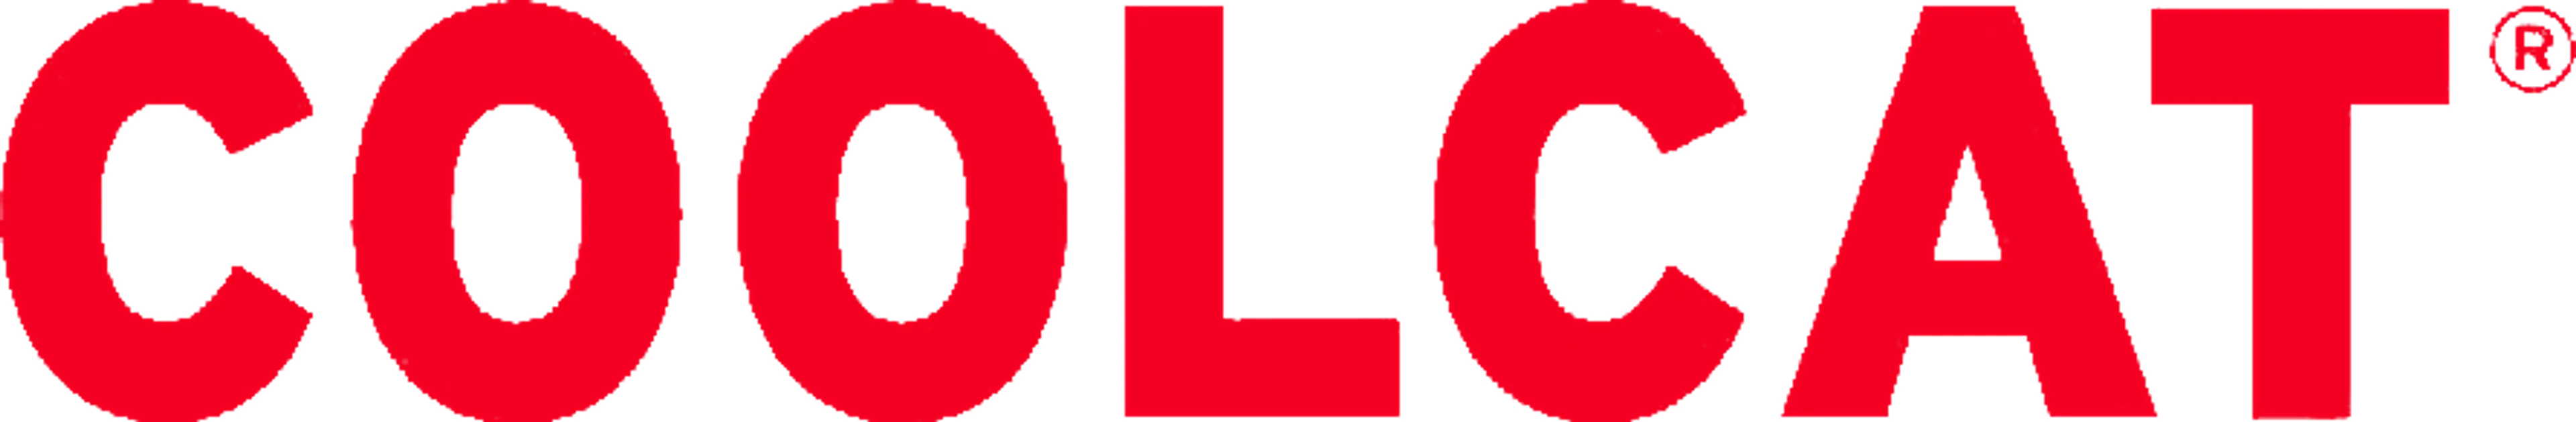 COOLCAT logo